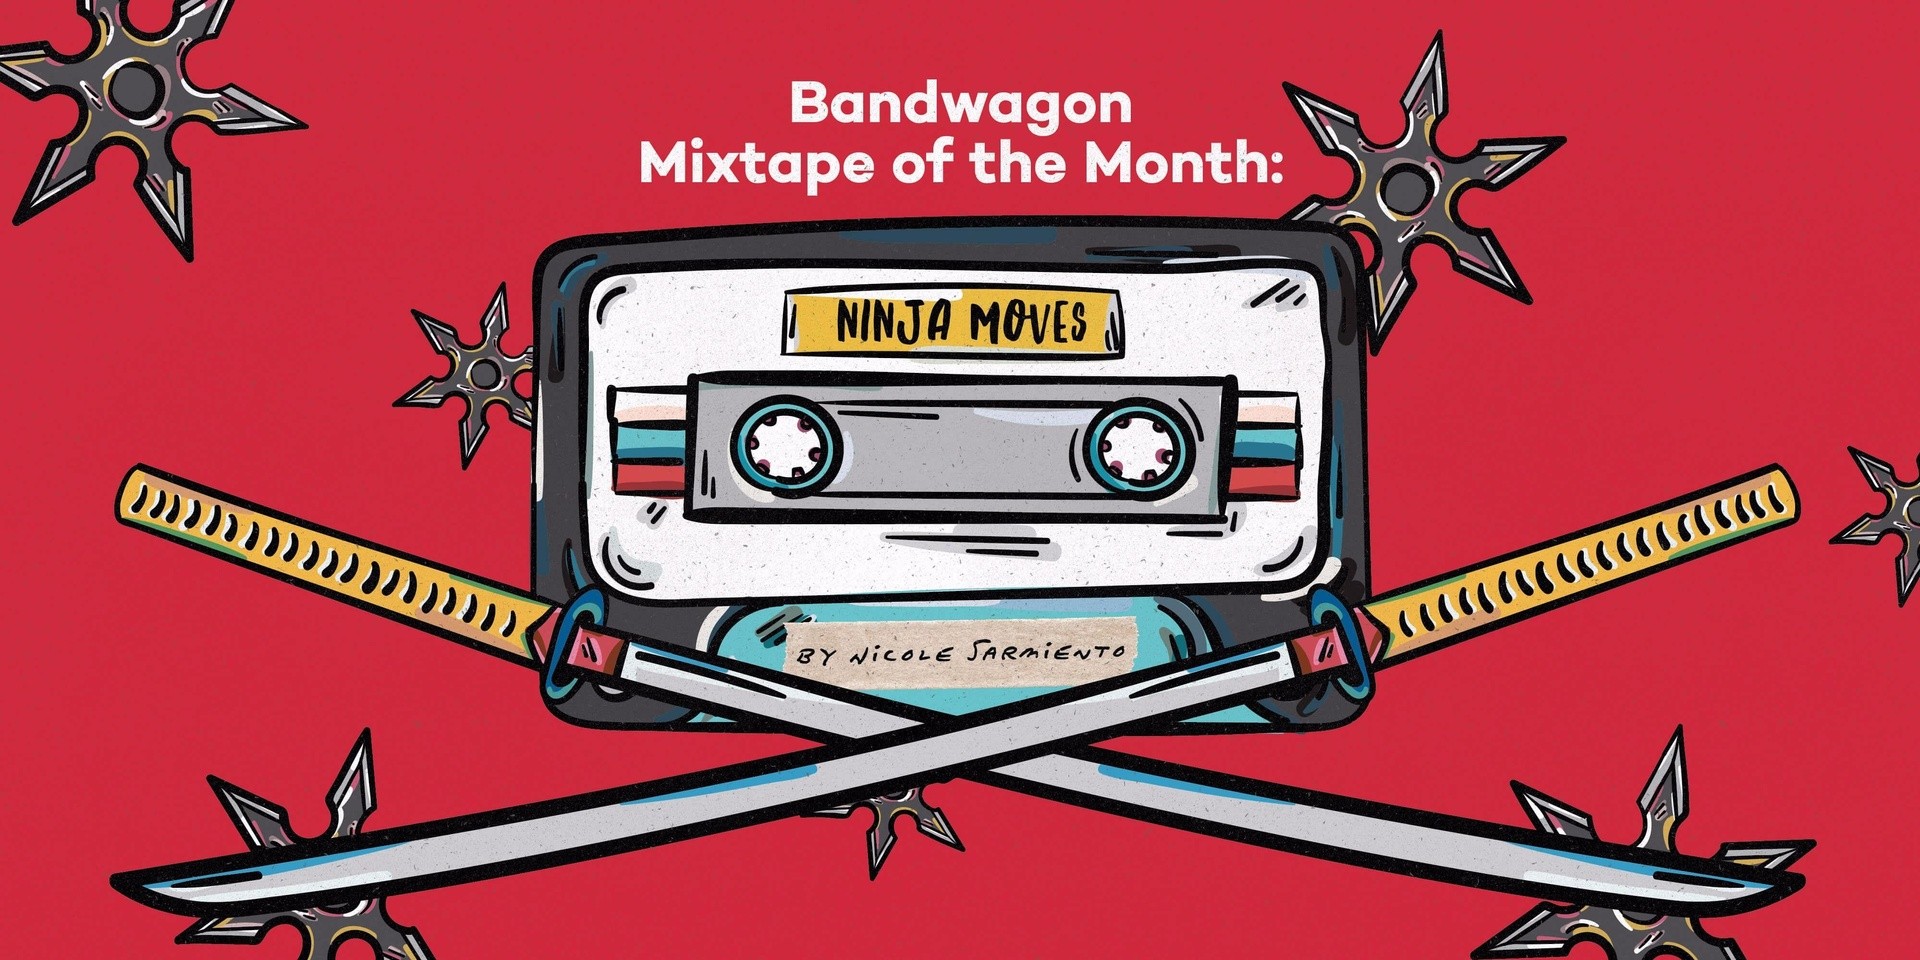 Bandwagon Mixtape of the Month #4.2: Ninja Moves